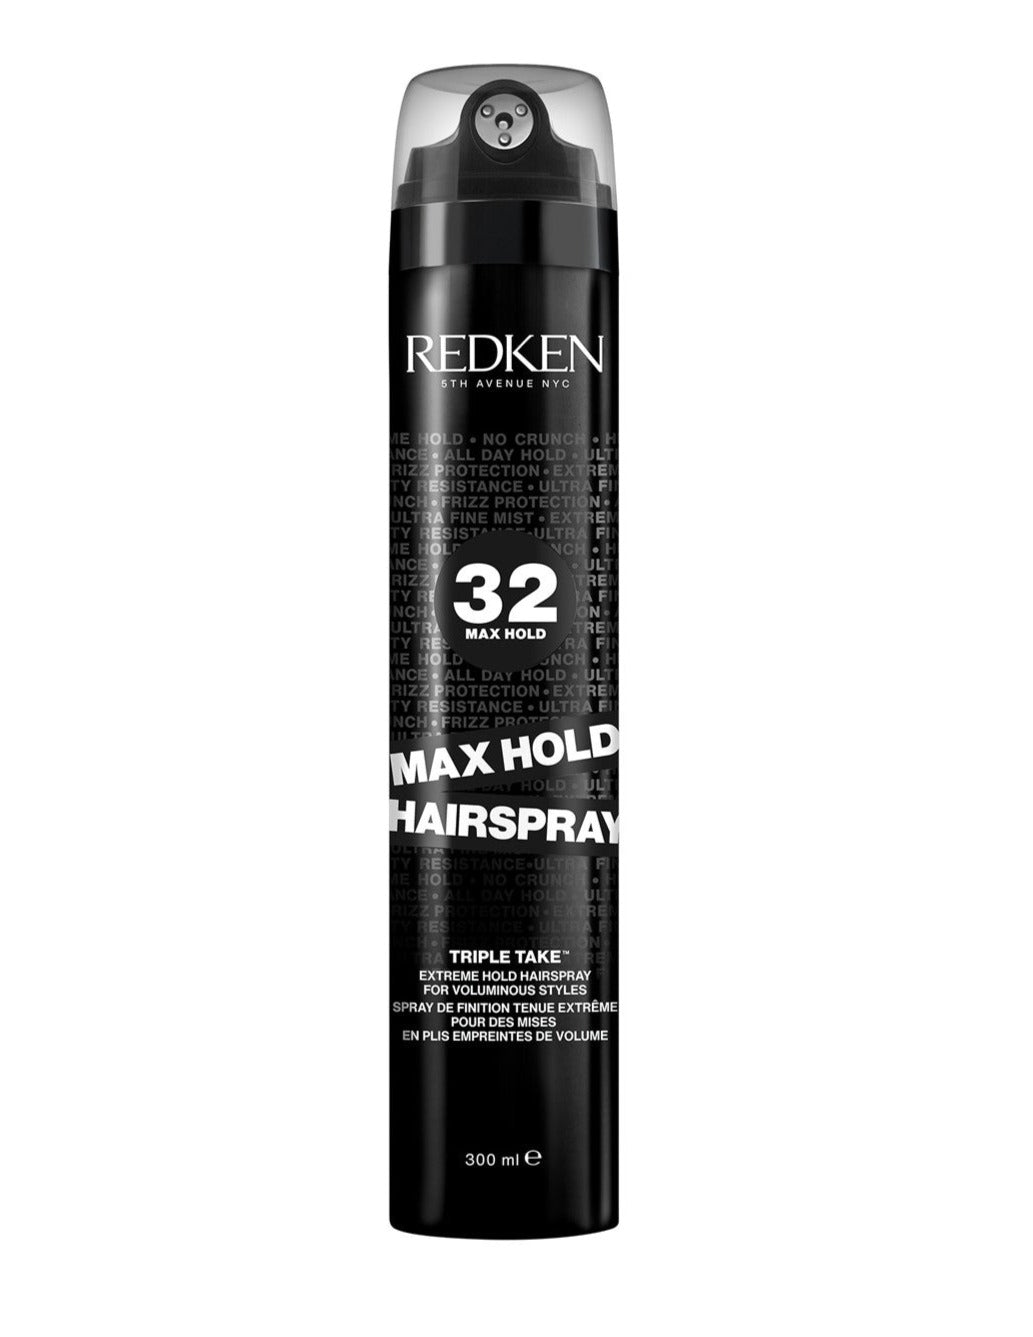 Redken Max Hold Hairspray 270g - Salon Warehouse